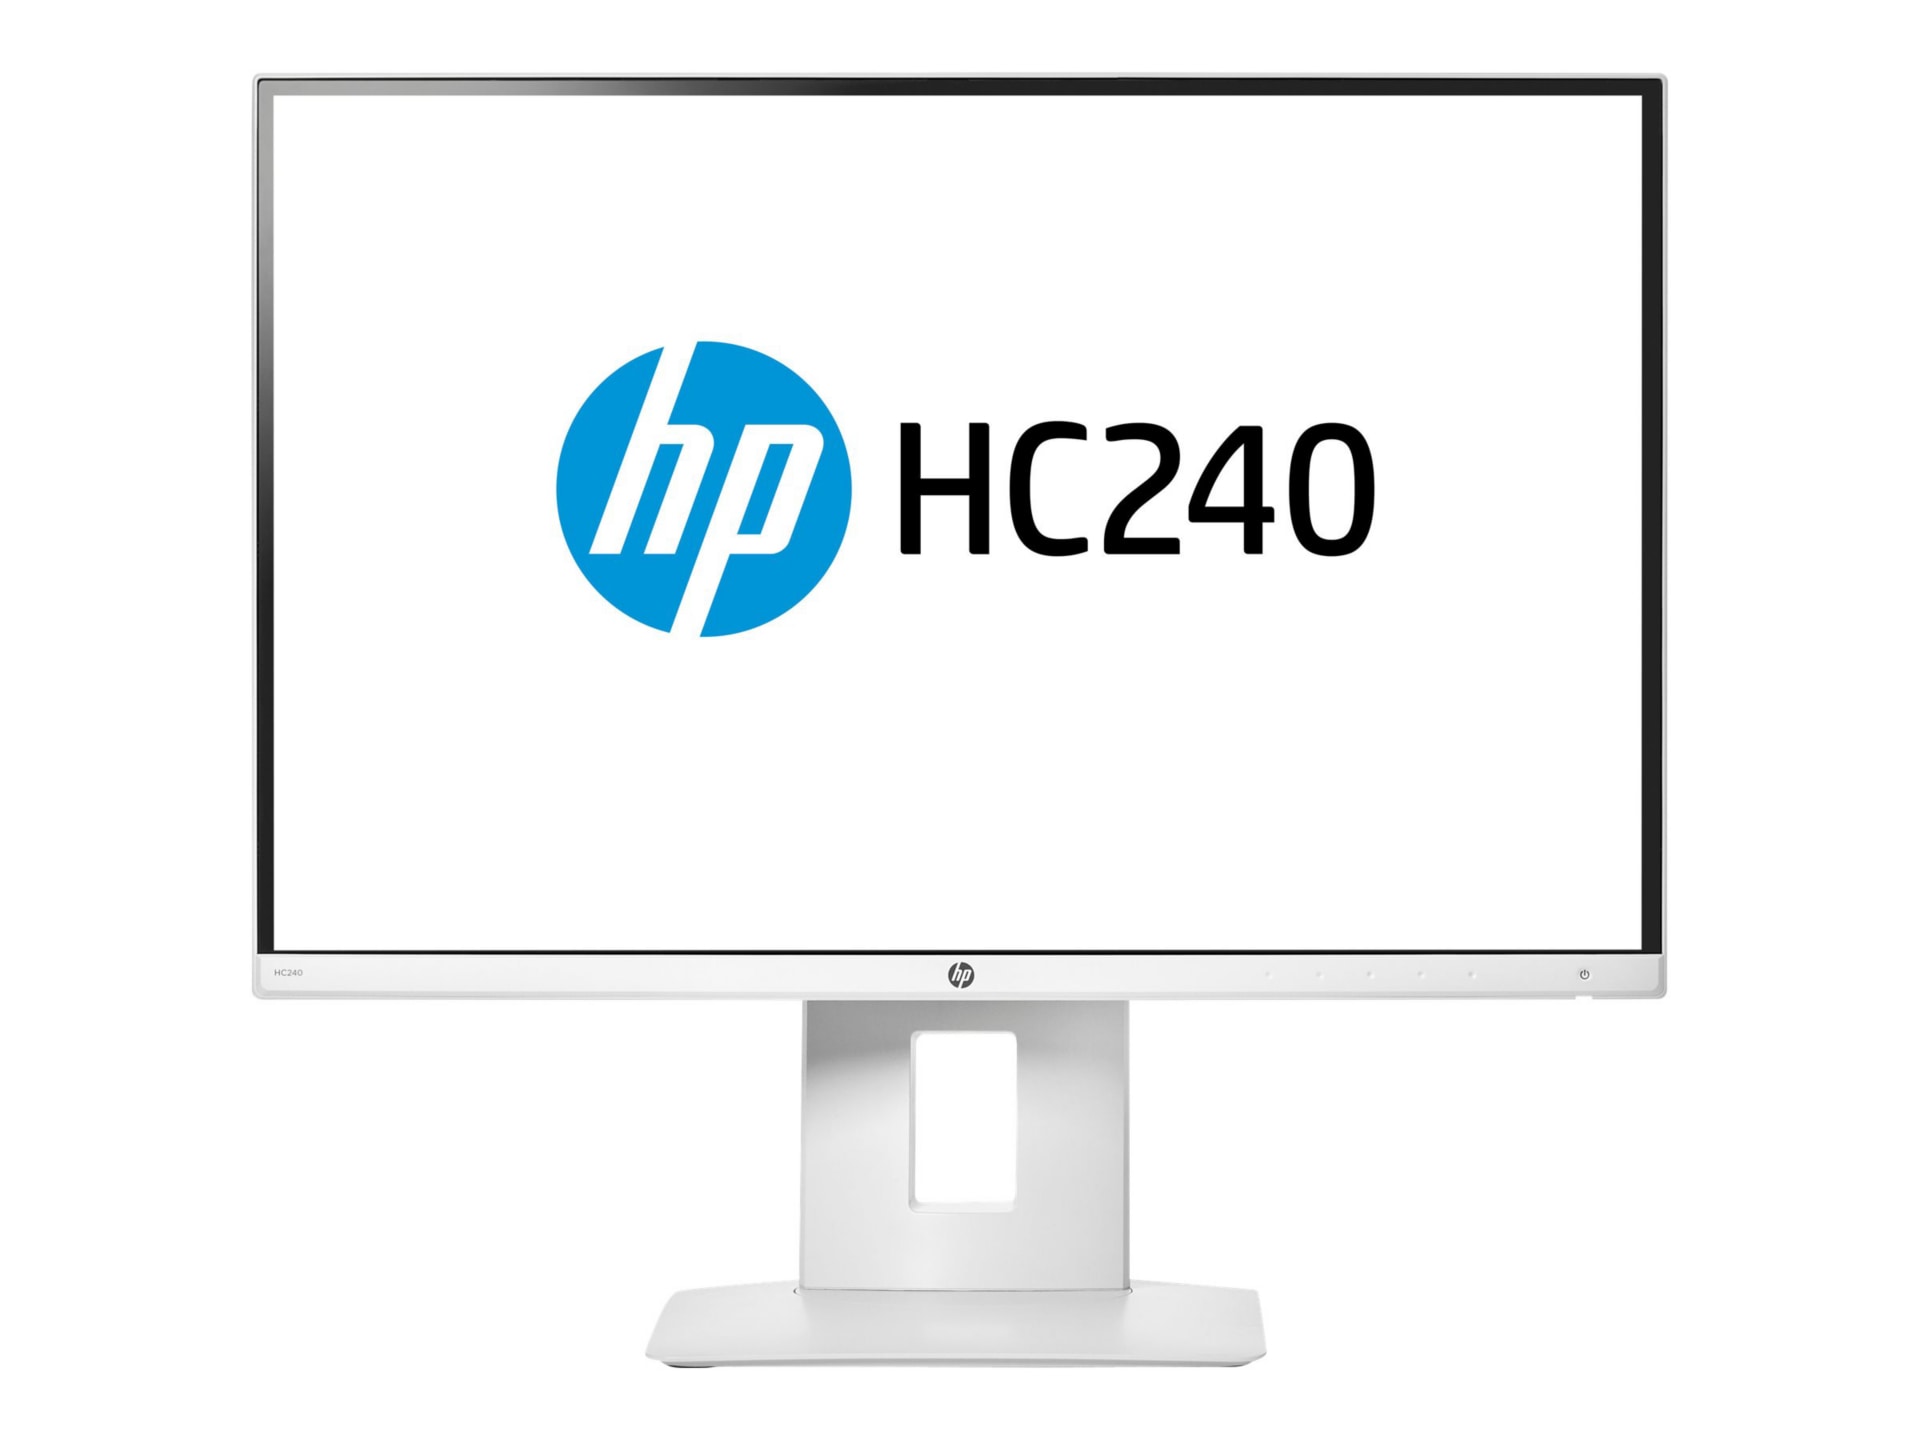 HP HC240 - Healthcare - LED monitor - 24"